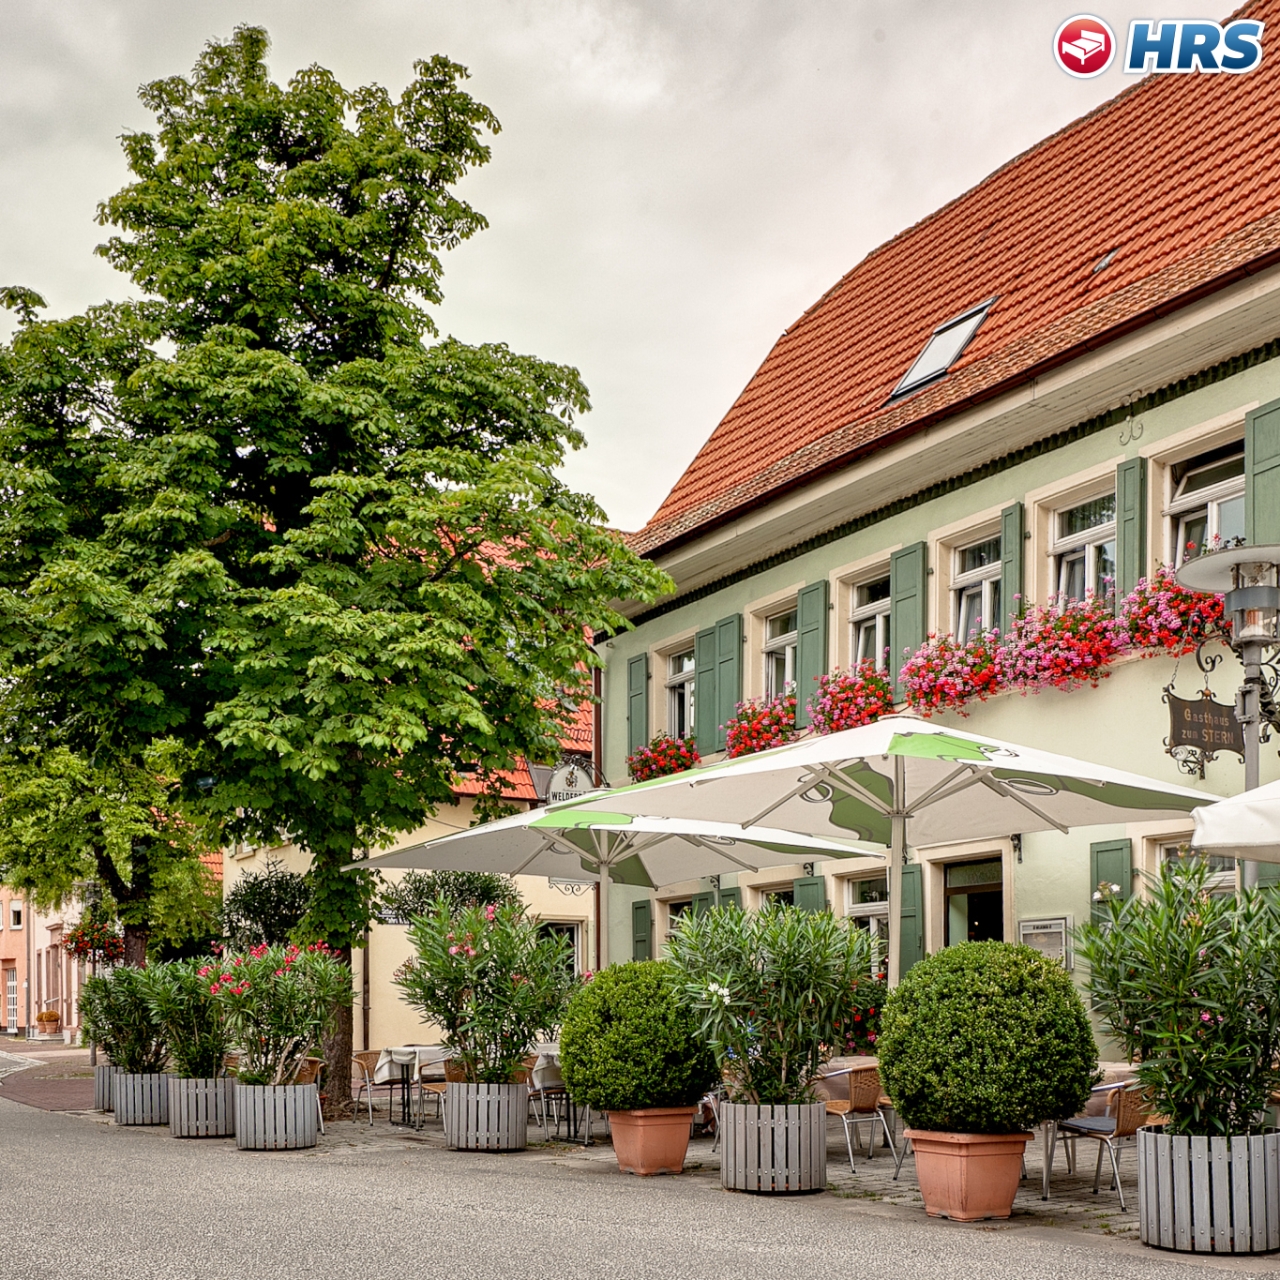 Hotel Restaurant Zum Stern Baden Wurttemberg At Hrs With Free Services